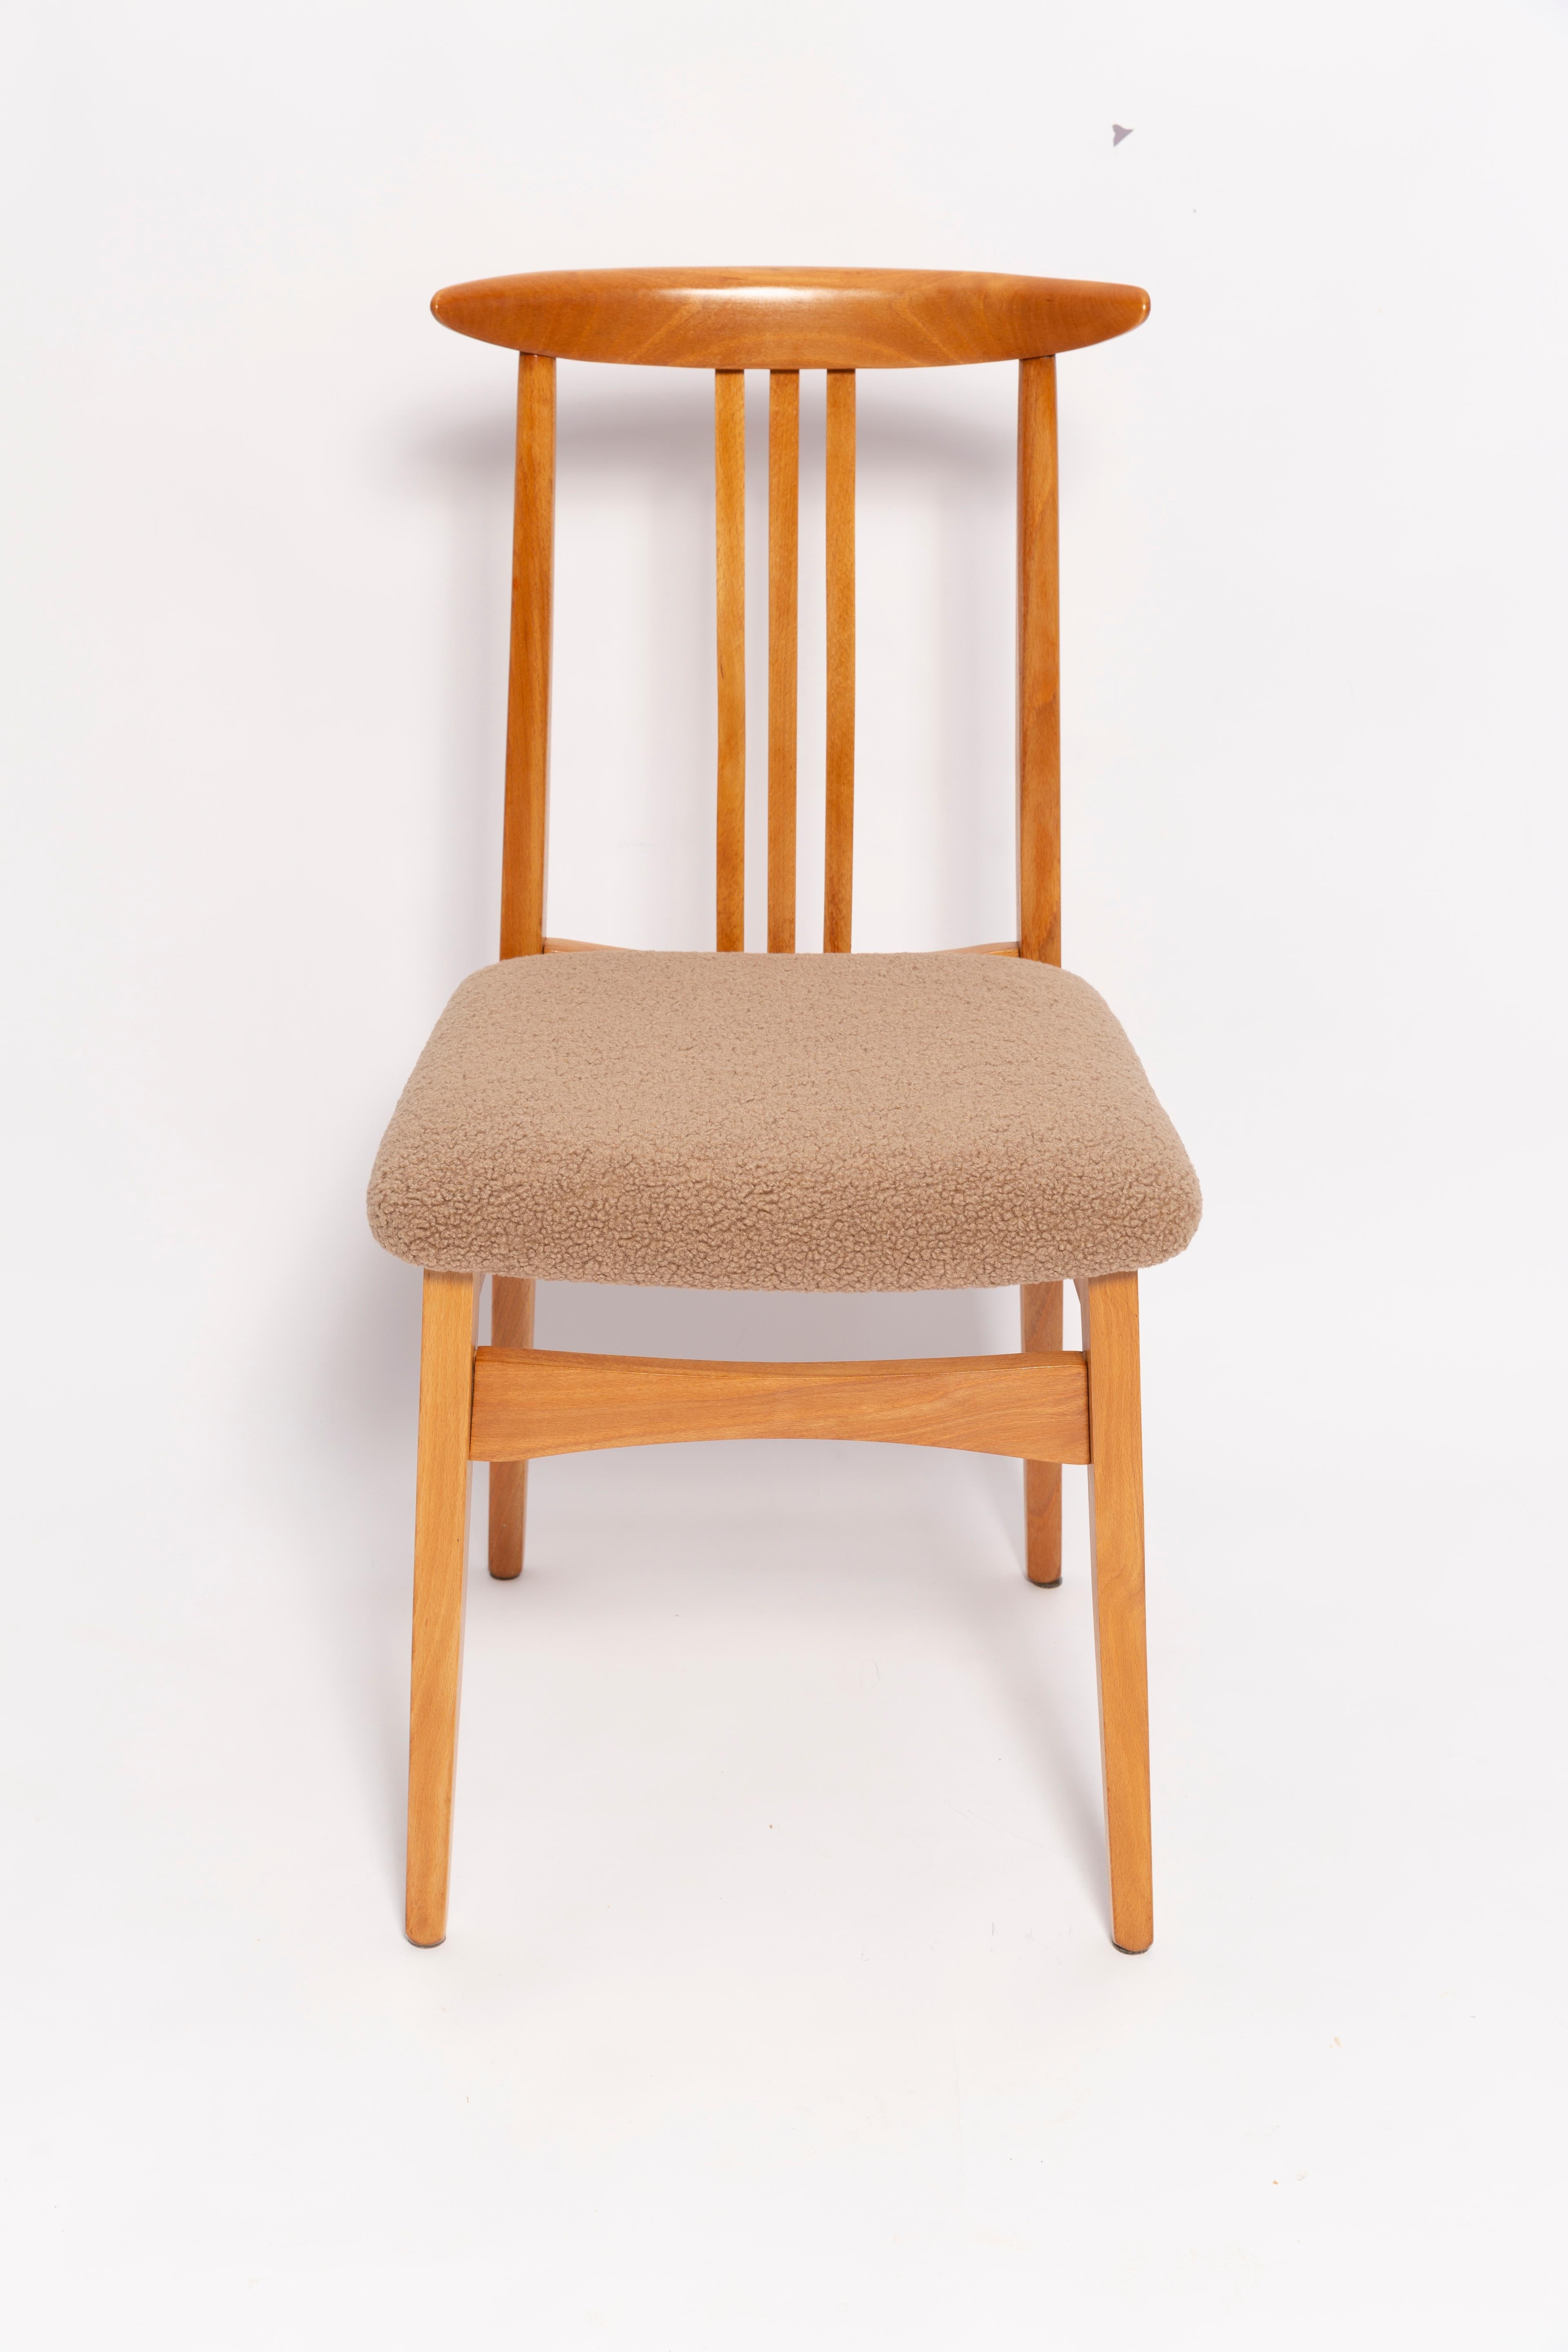 Polish Set of 4 Mid-Century Latte Boucle Chairs, Light Wood, M. Zielinski, Europe 1960s For Sale